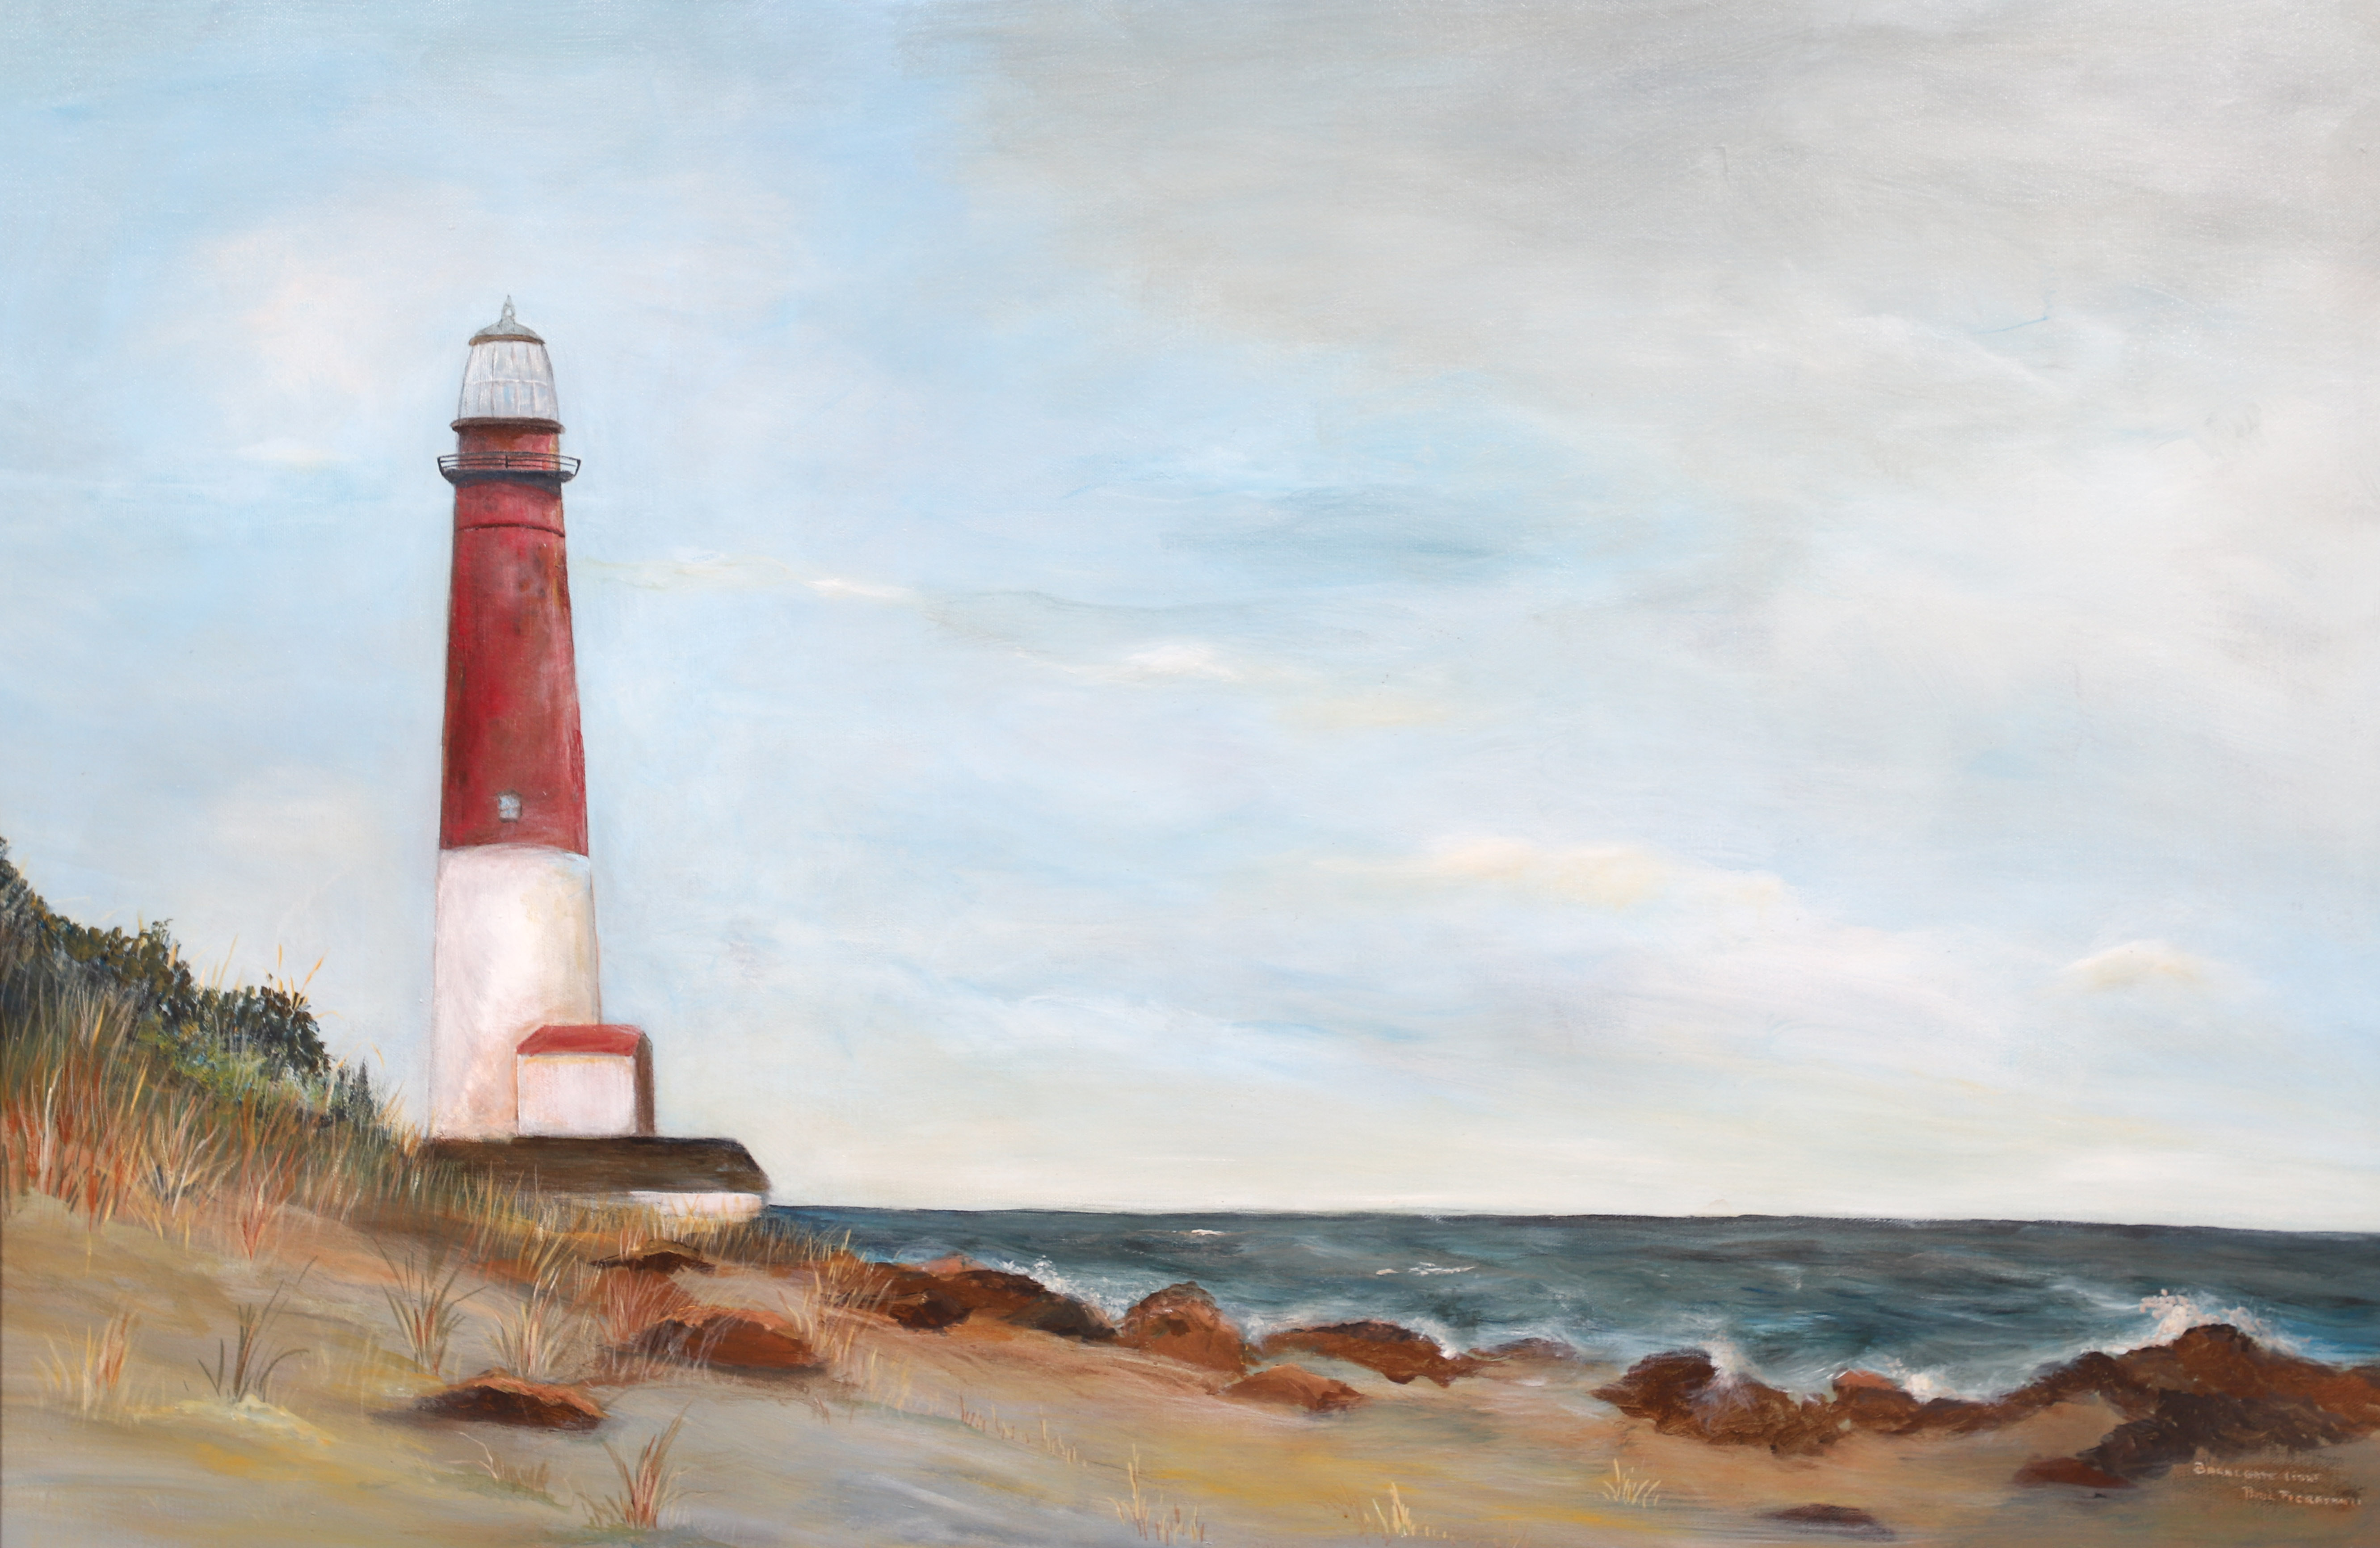 Painting of Barnegat Lighthouse,